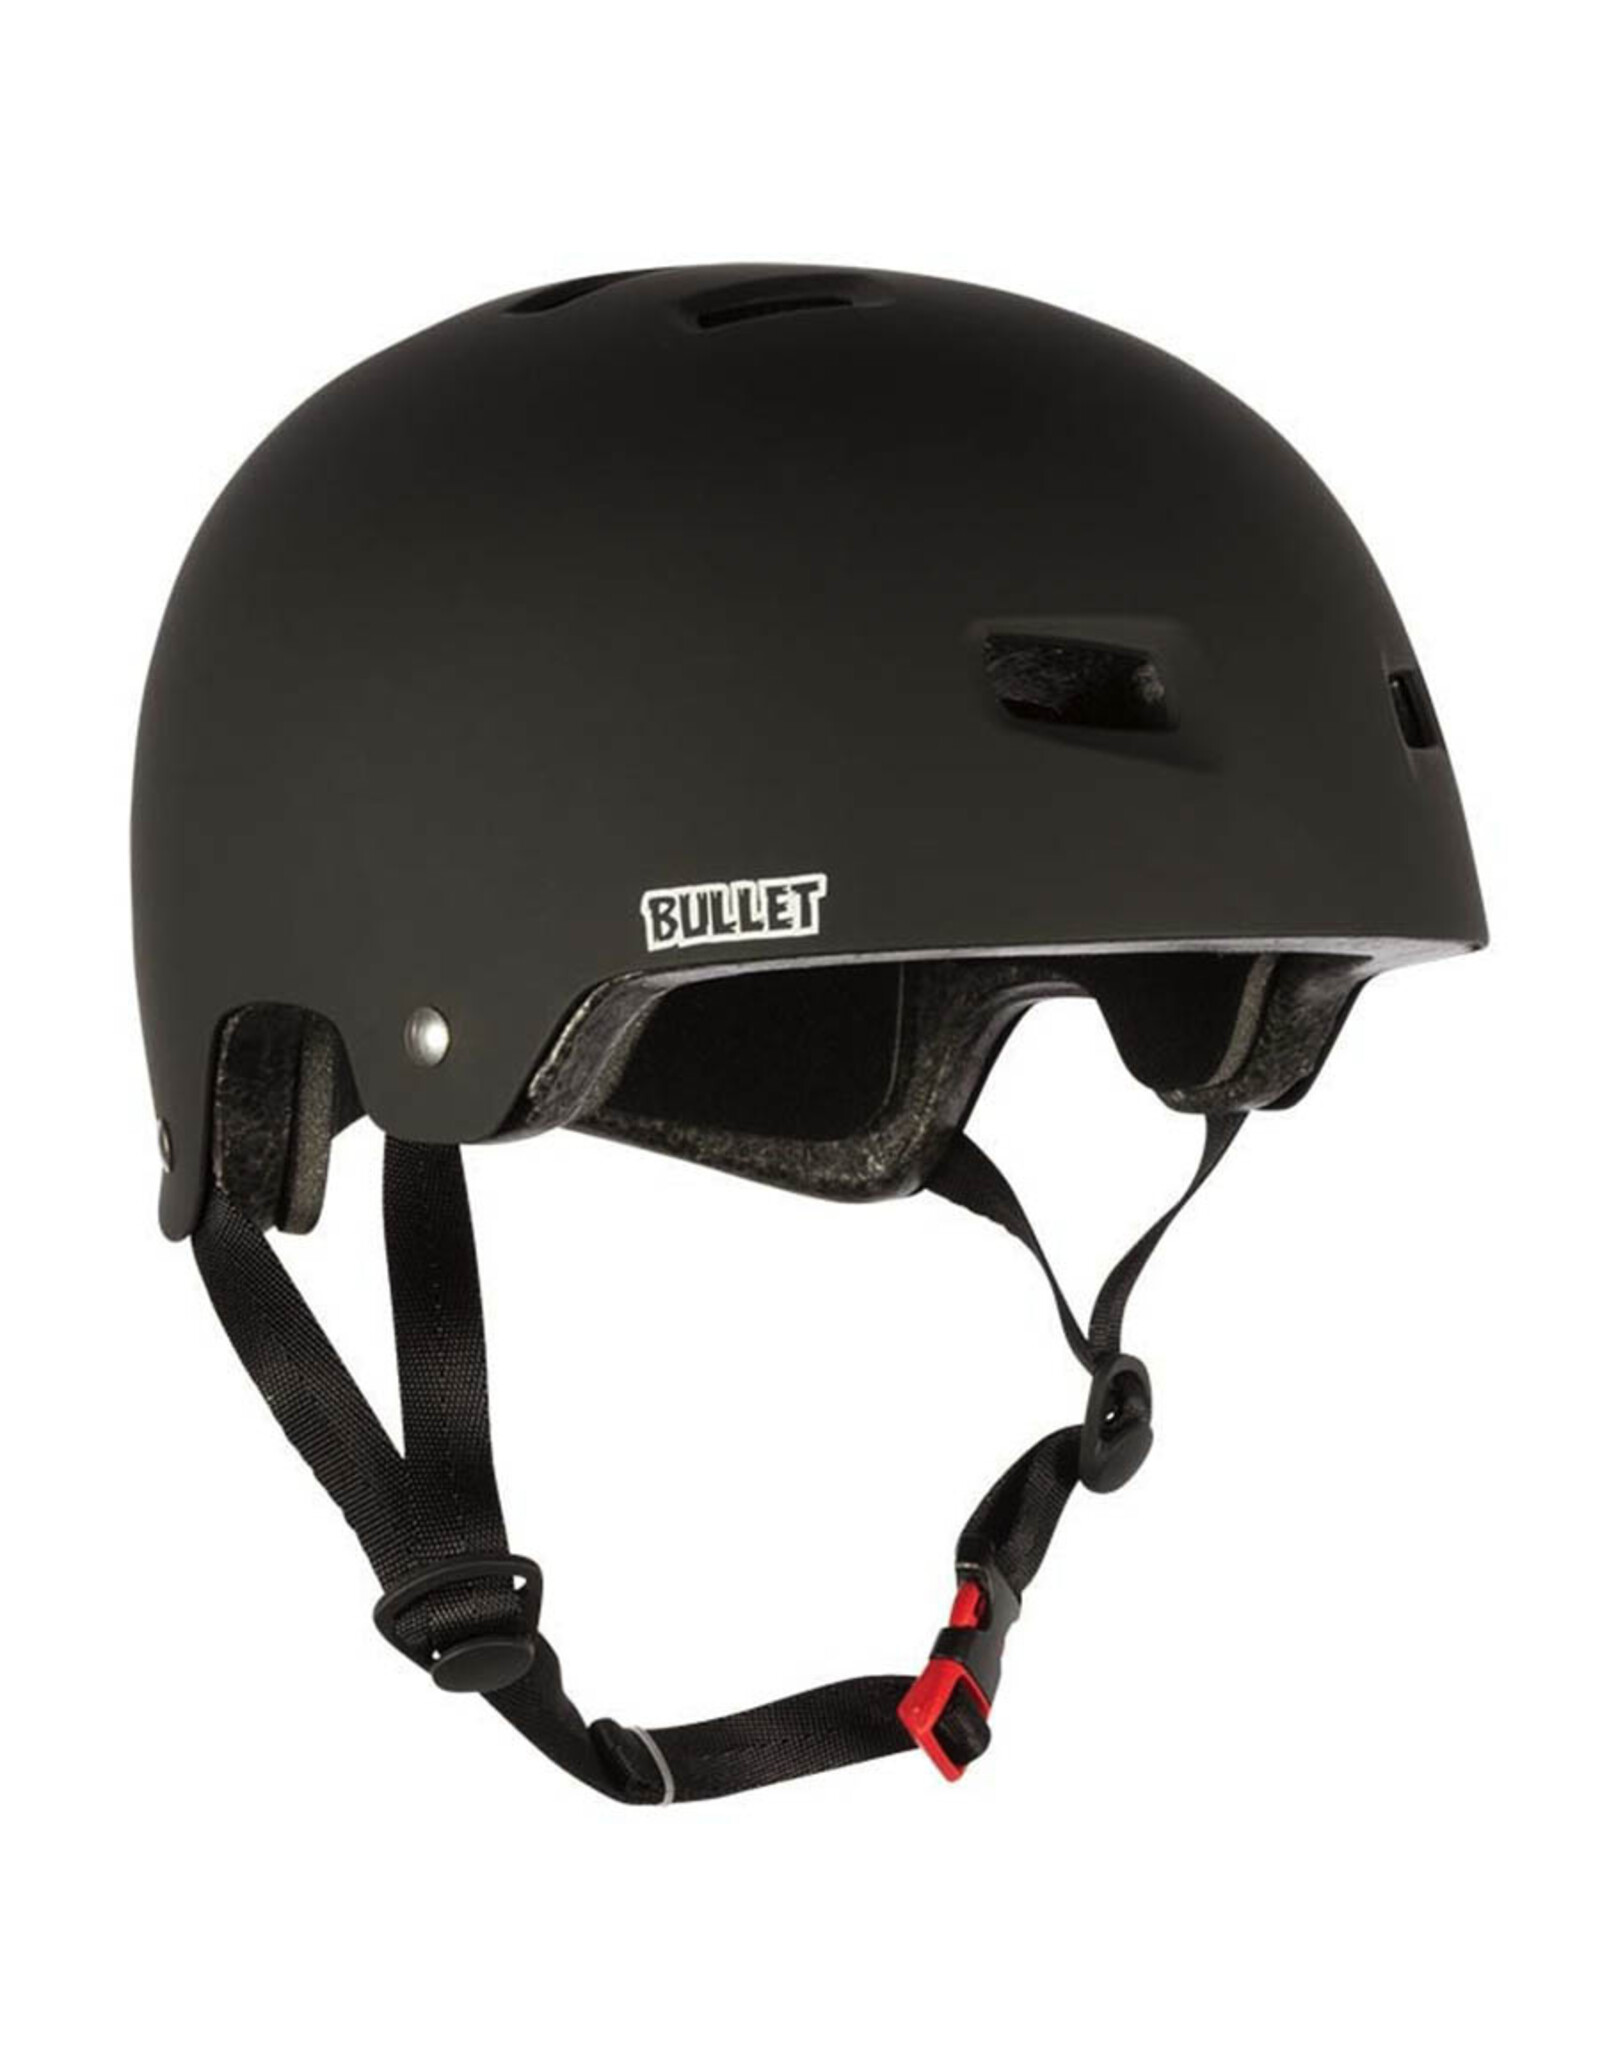 Bullet Safety Gear Bullet Deluxe Helmet (Matte Black)